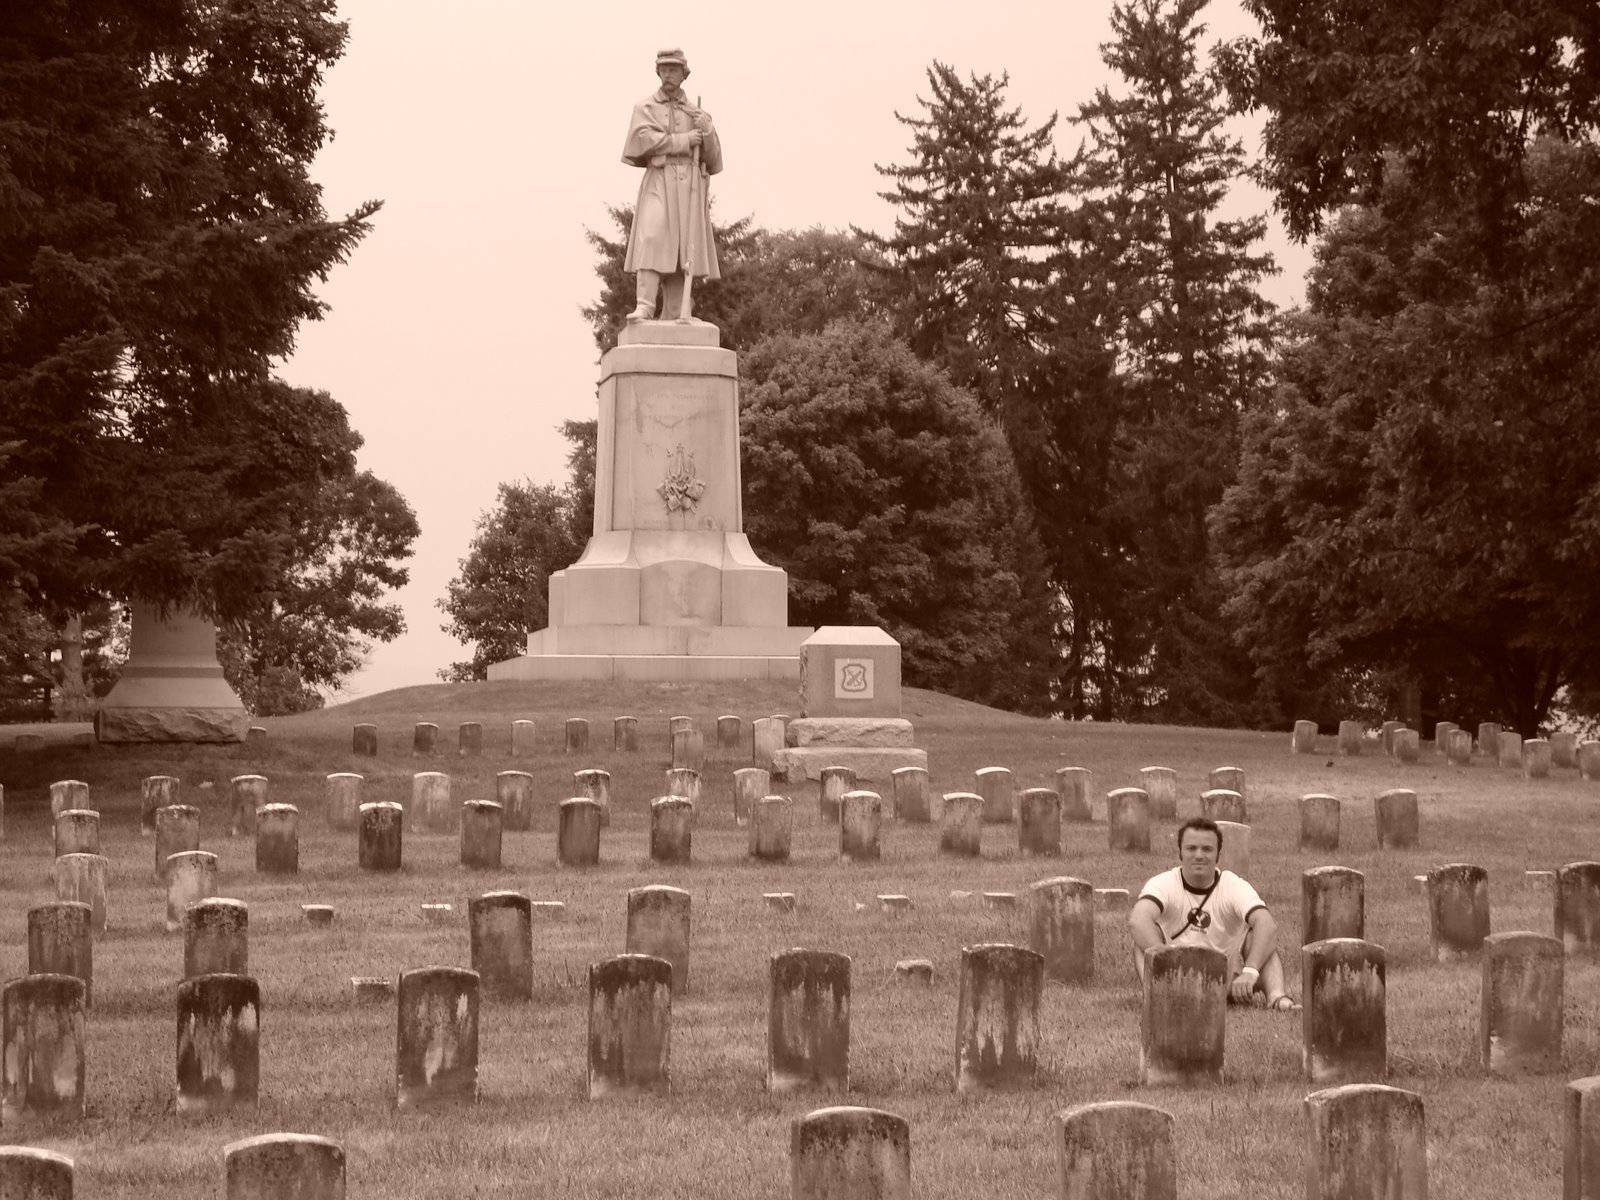 Antietam Creek Cemetery